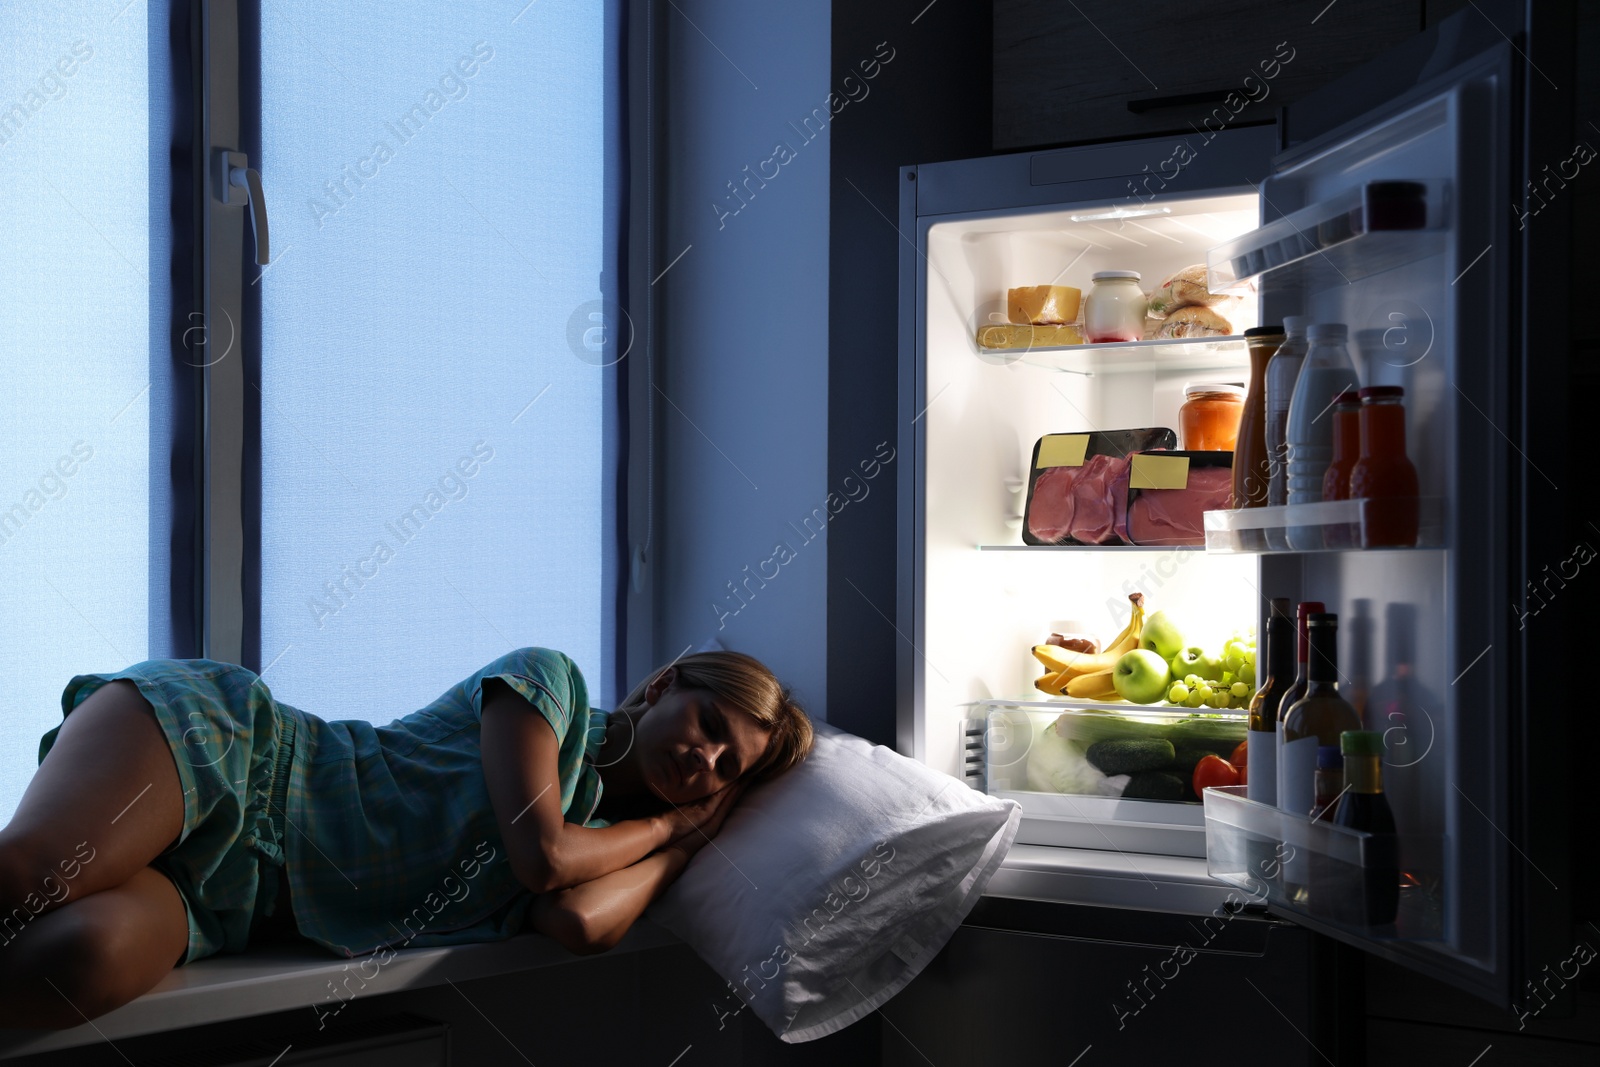 Photo of Woman sleeping on window sill near open refrigerator in kitchen at night